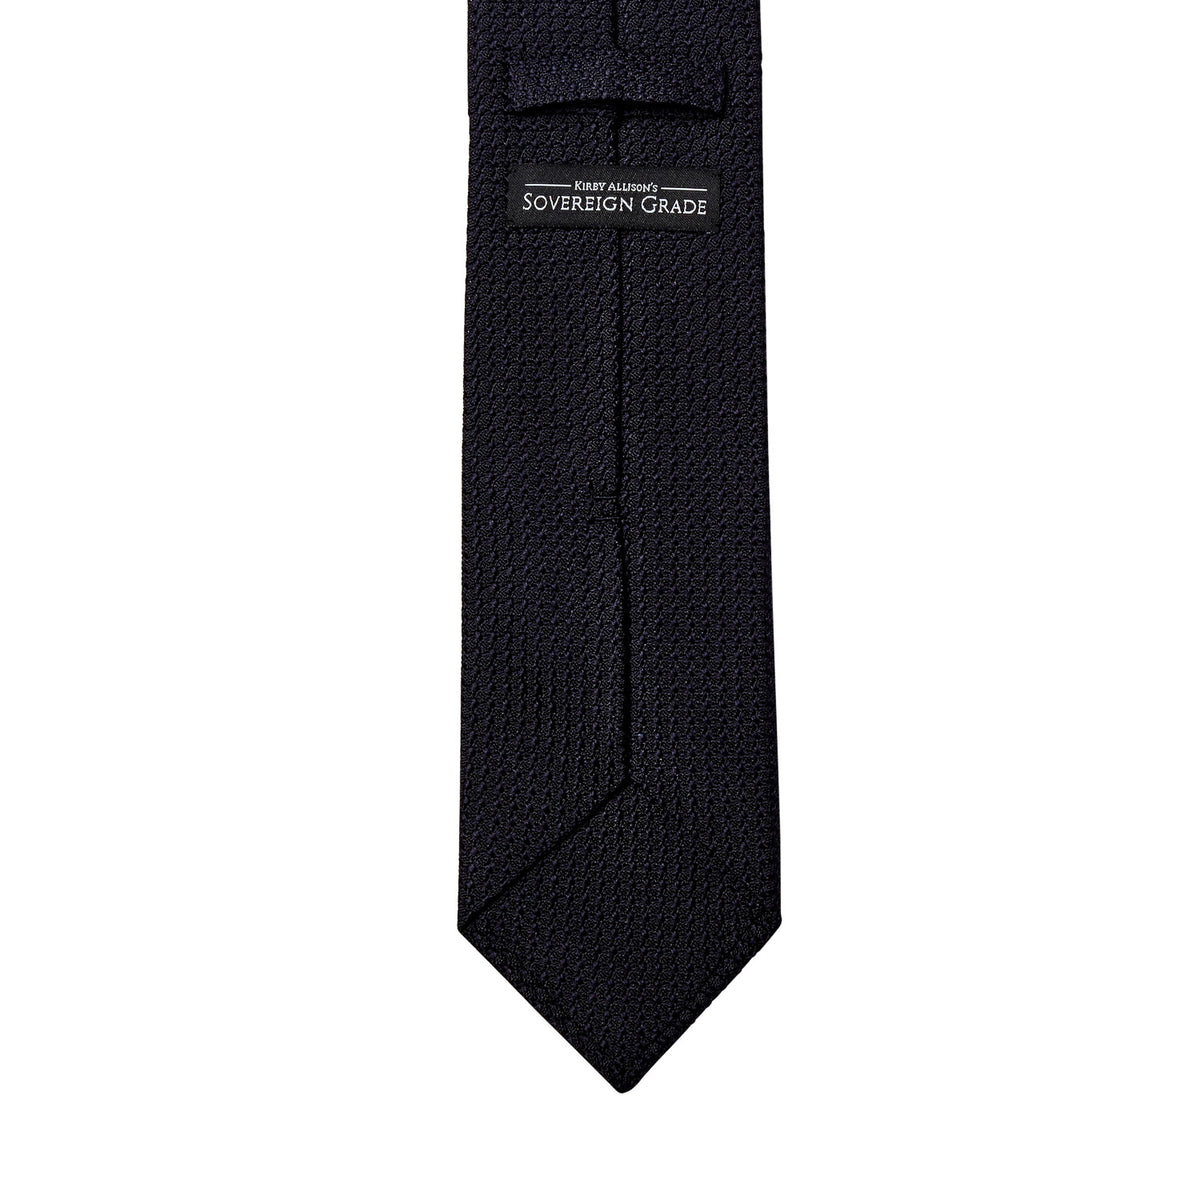 A Sovereign Grade Black Grenadine Grossa Tie by KirbyAllison.com on a white background handmade in the United Kingdom.